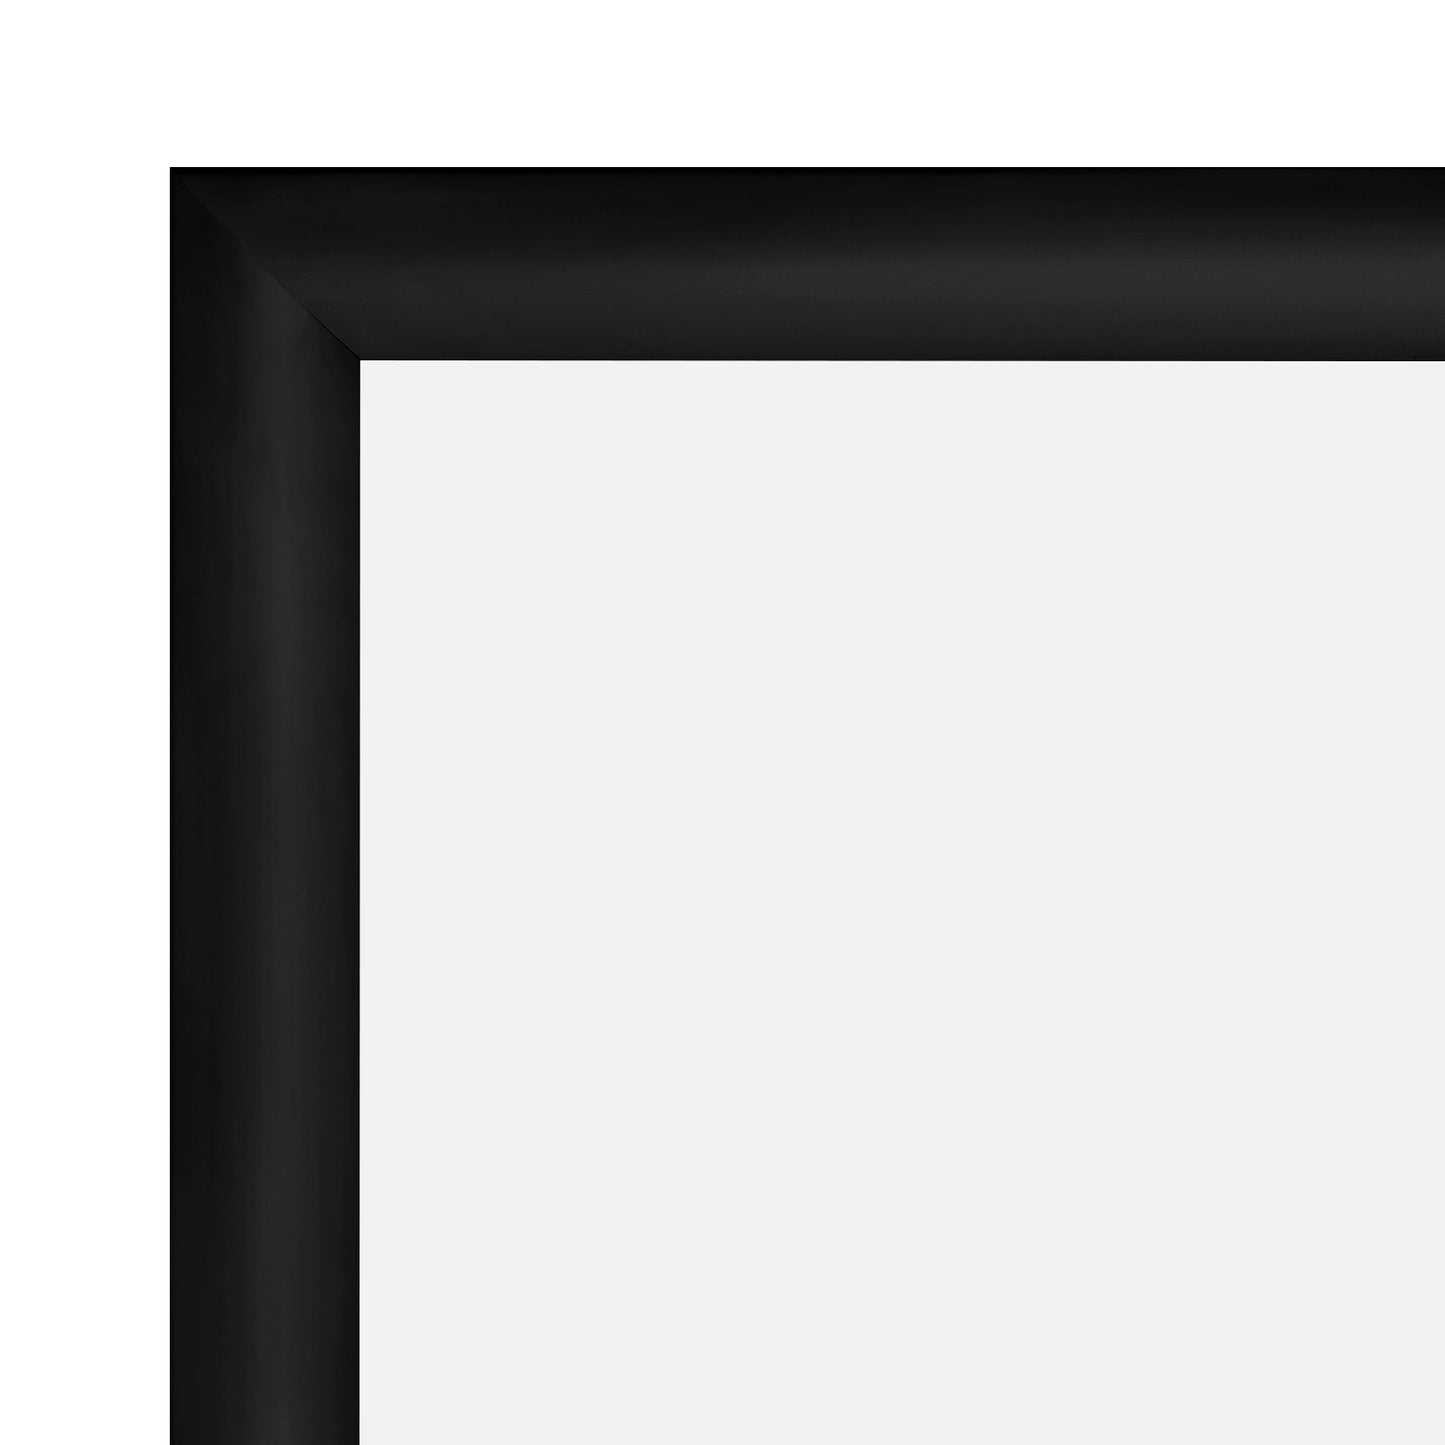 10x32 Black SnapeZo® Snap Frame - 1.2" Profile - Snap Frames Direct